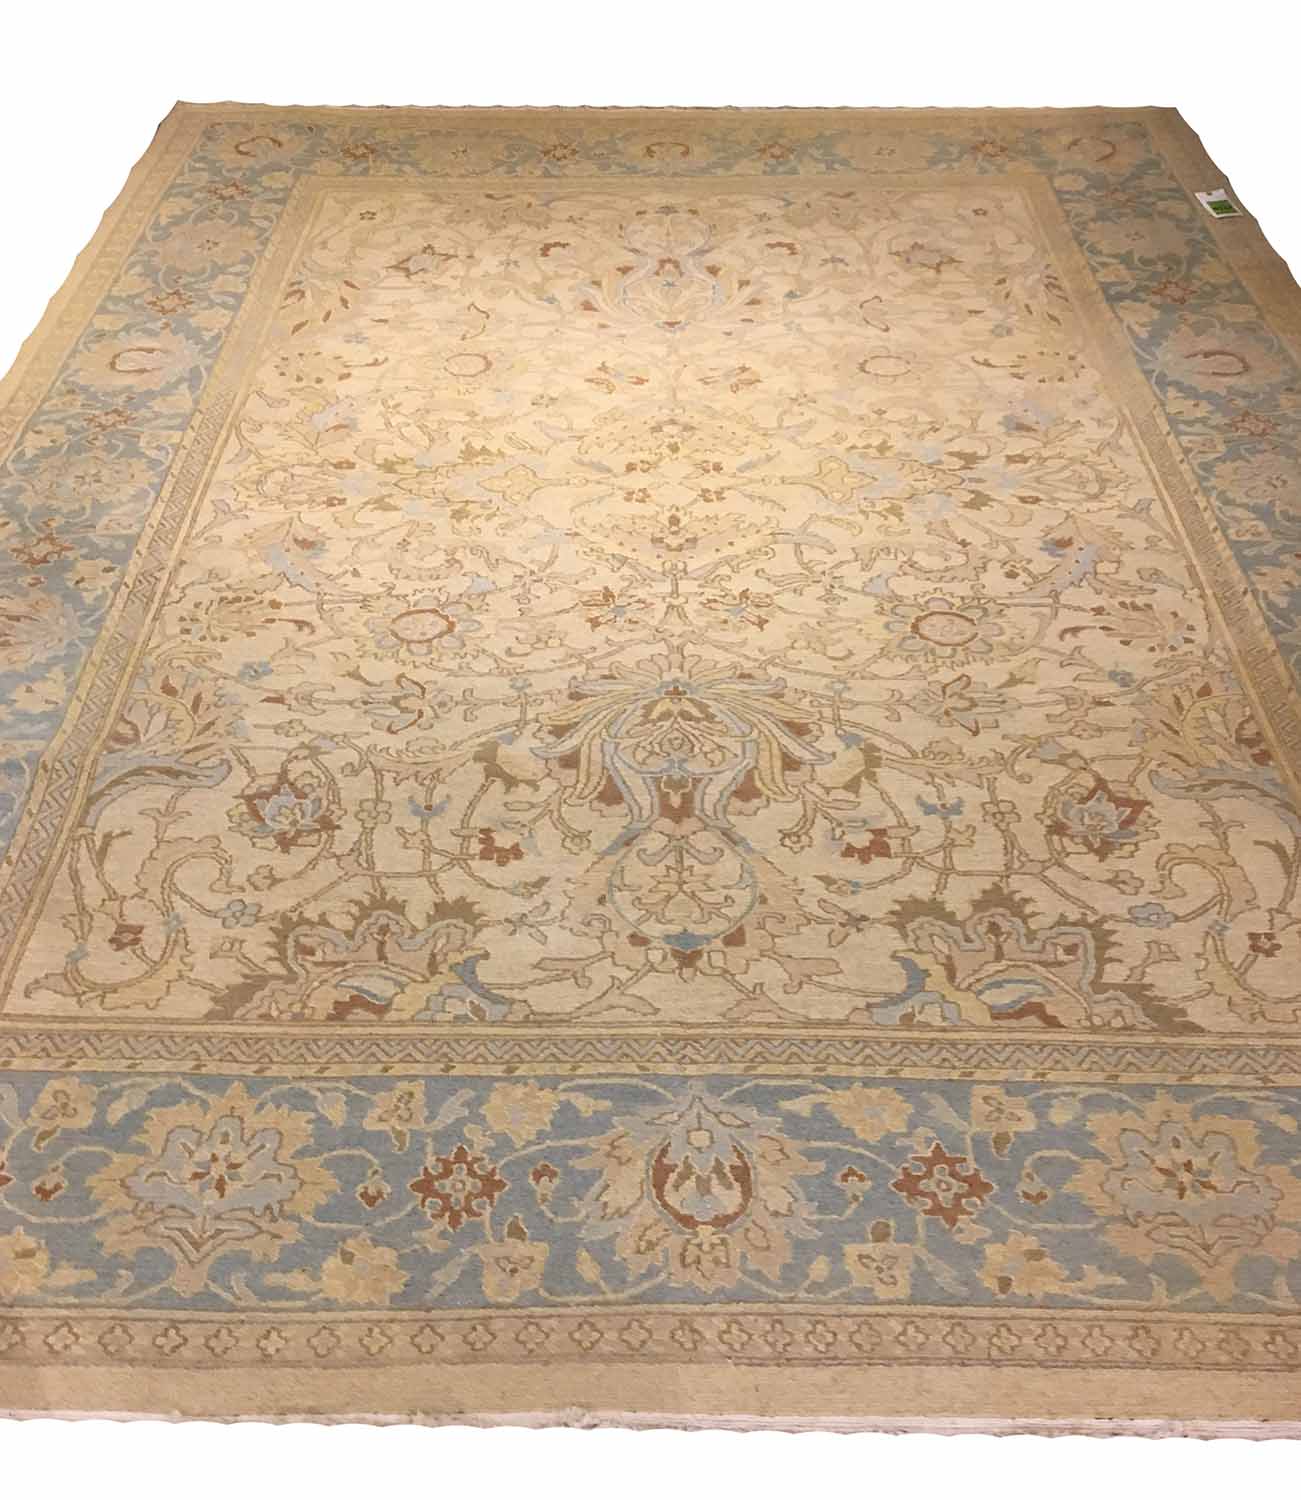 FINE SOUMAKH CARPET, Persian safavid design, 350cm x 260cm.